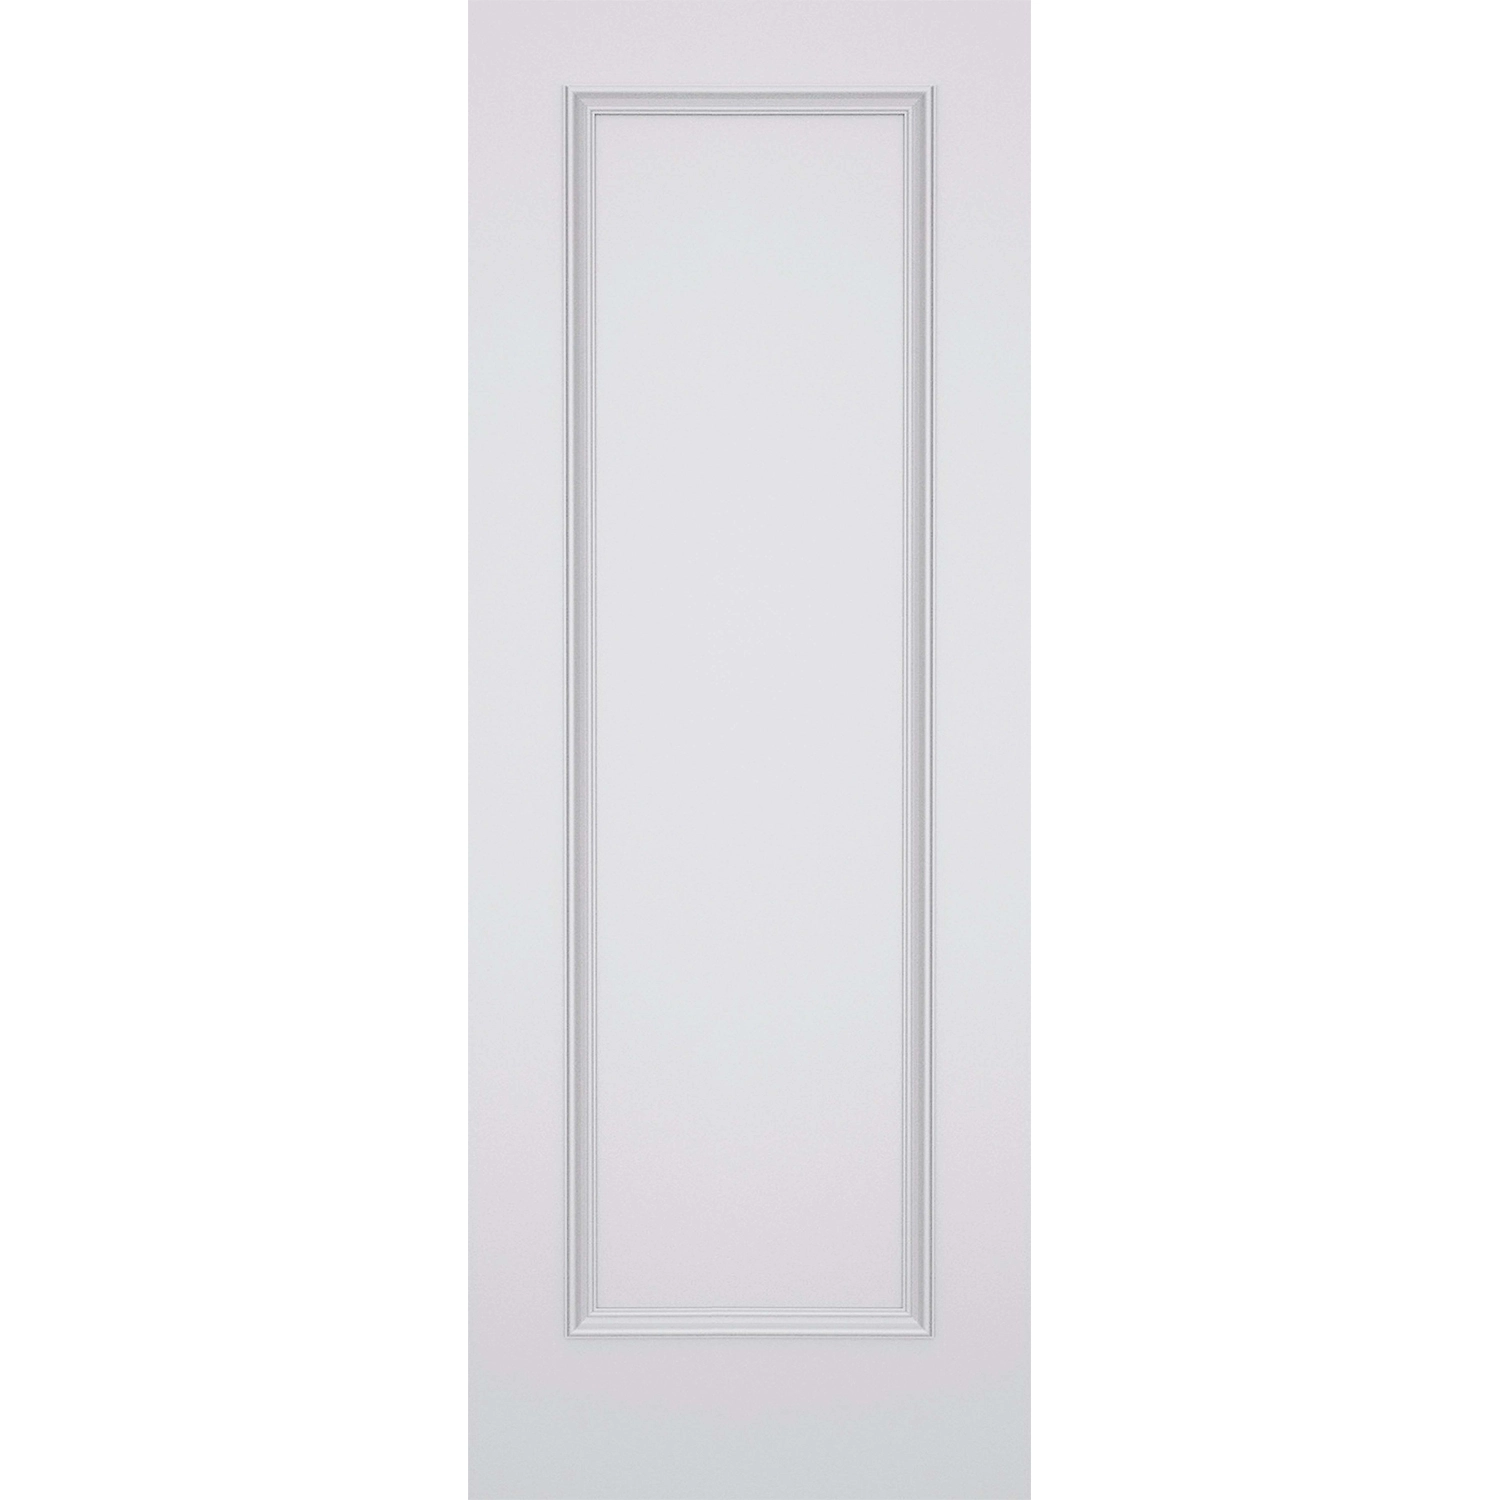 1 Panel 80 x 30 x 1-3/8 Smooth Hollow Door Raised